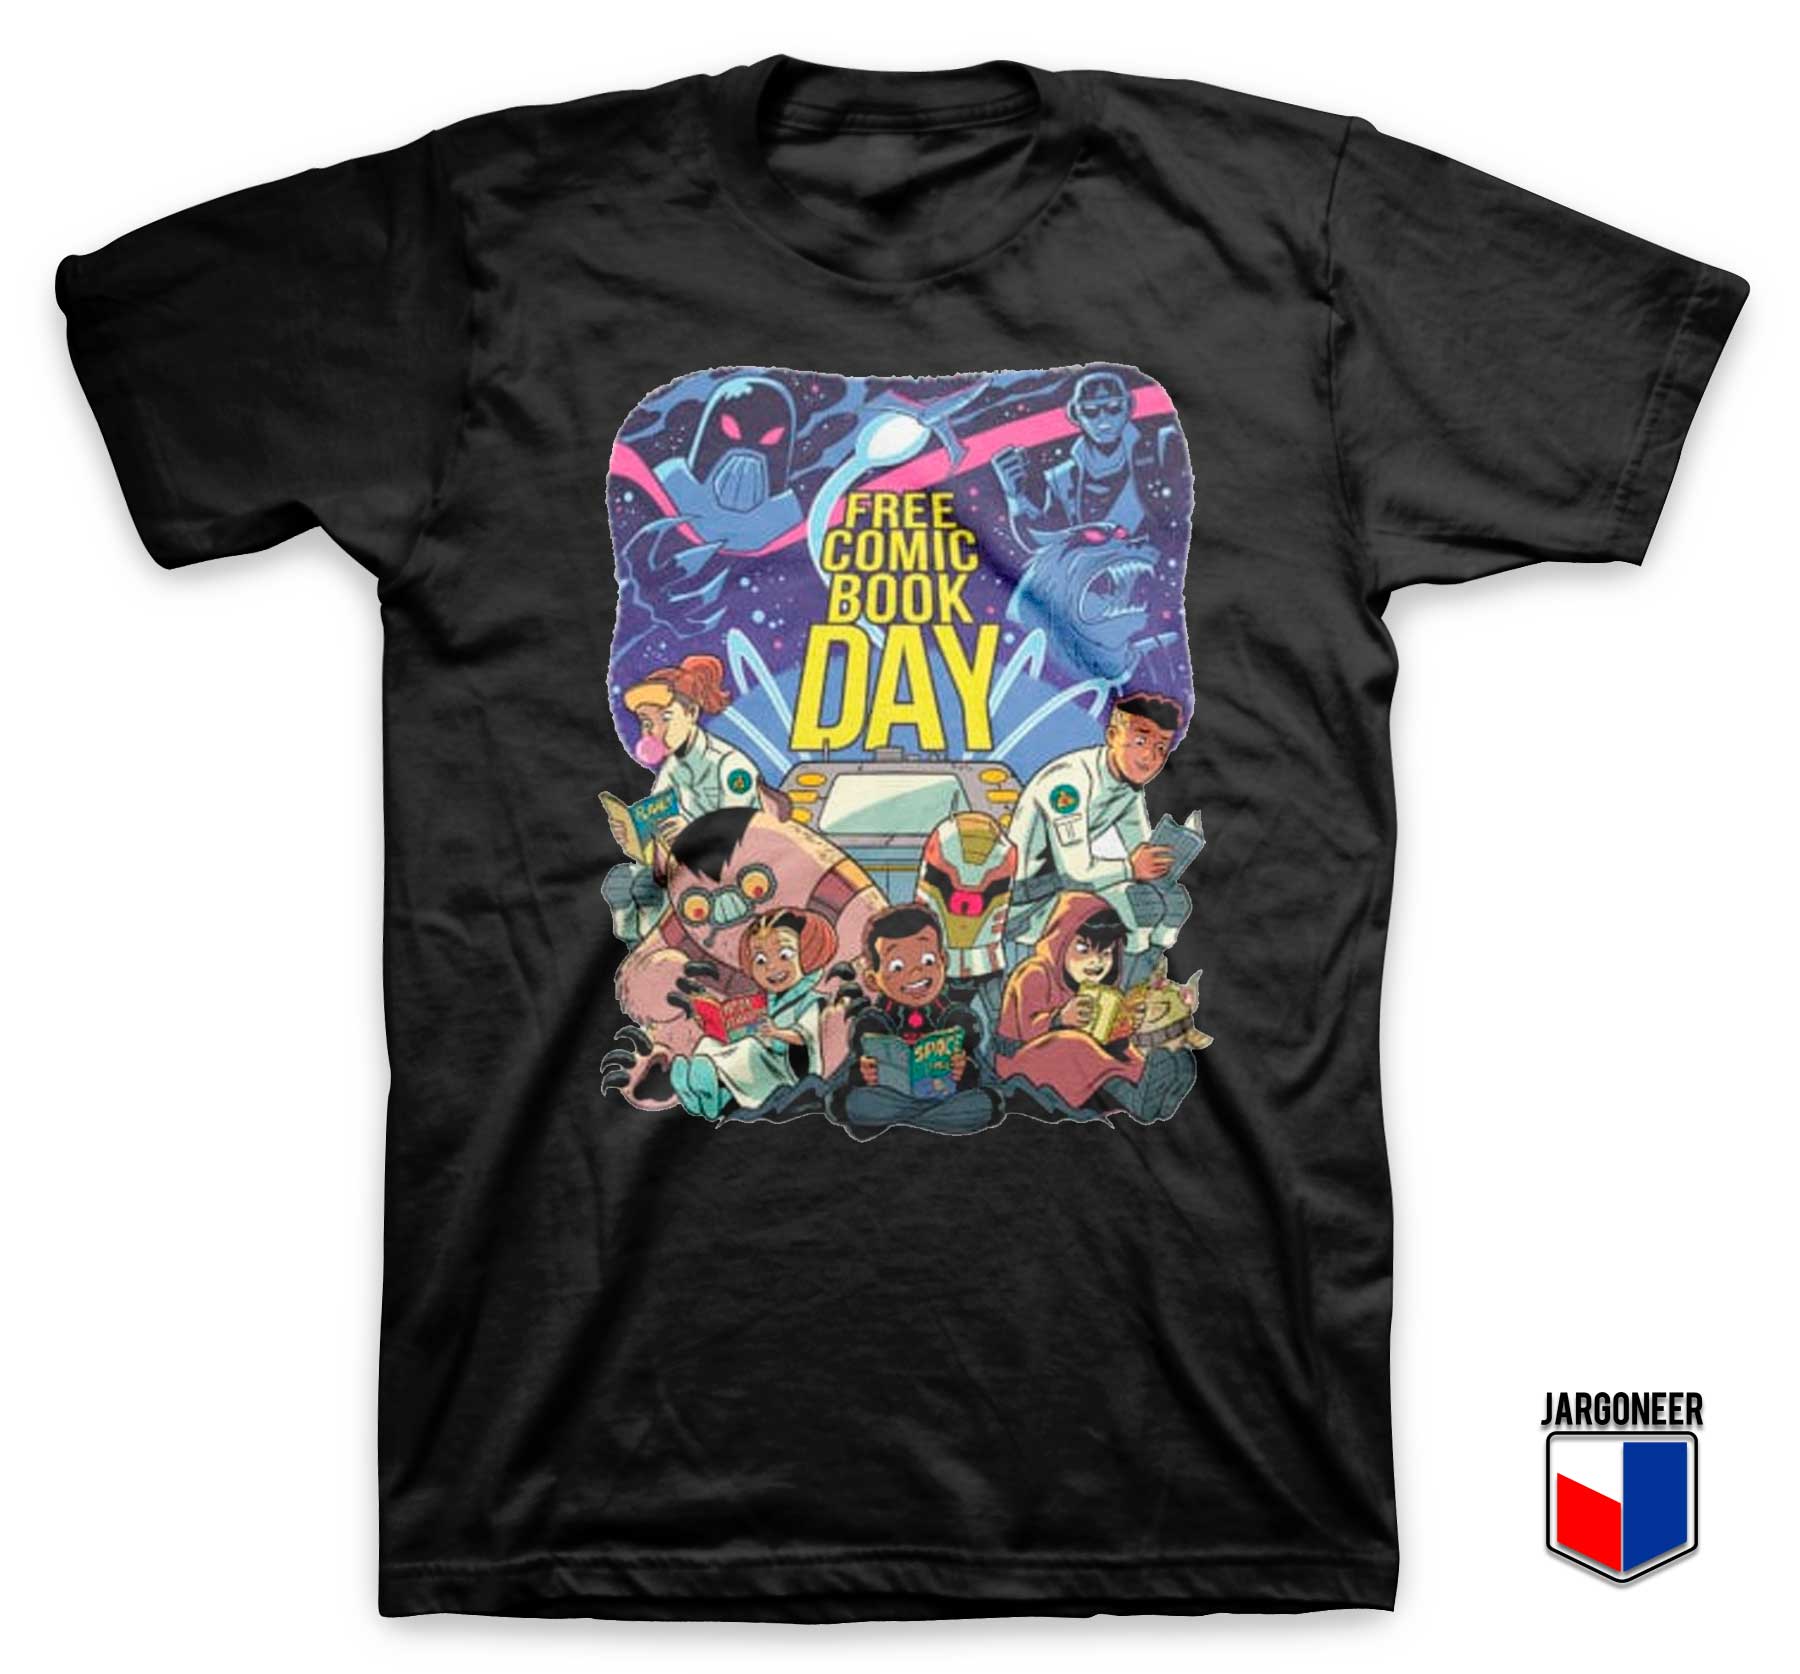 Free Comic Book Day T Shirt - Shop Unique Graphic Cool Shirt Designs